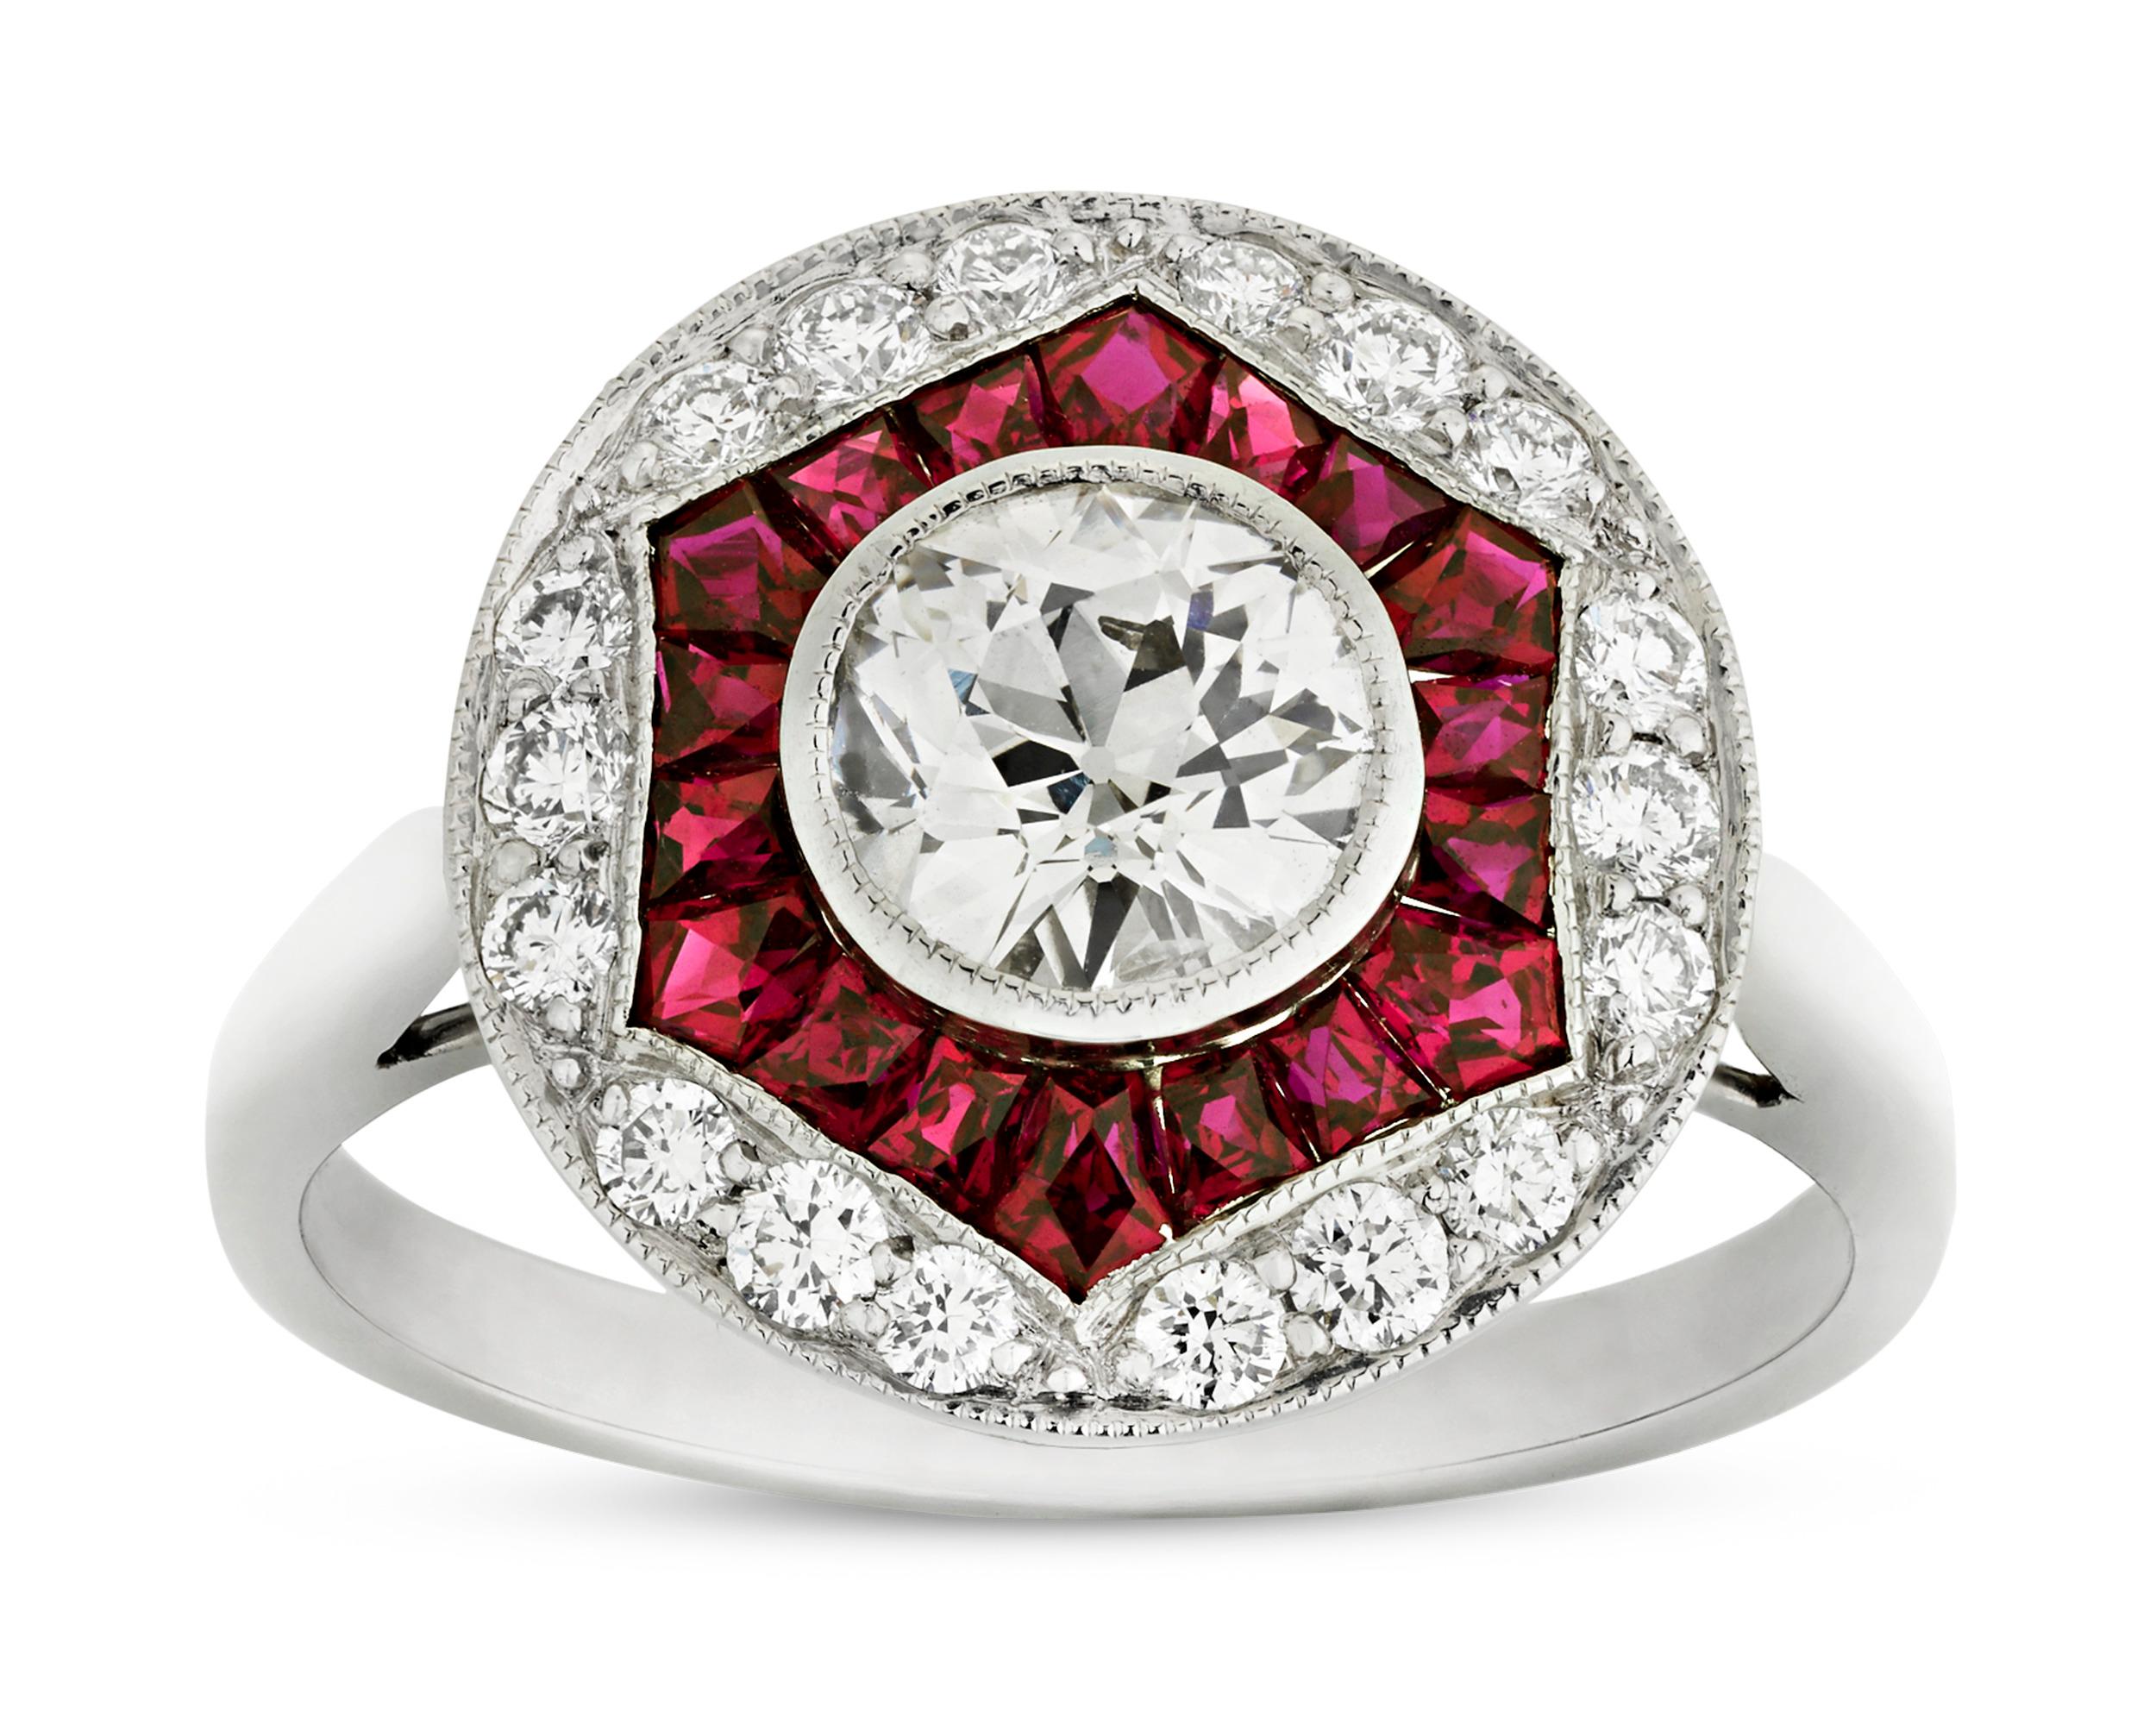 Women's Art Deco Inspired Ruby and Diamond Ring, 1.57 Carat